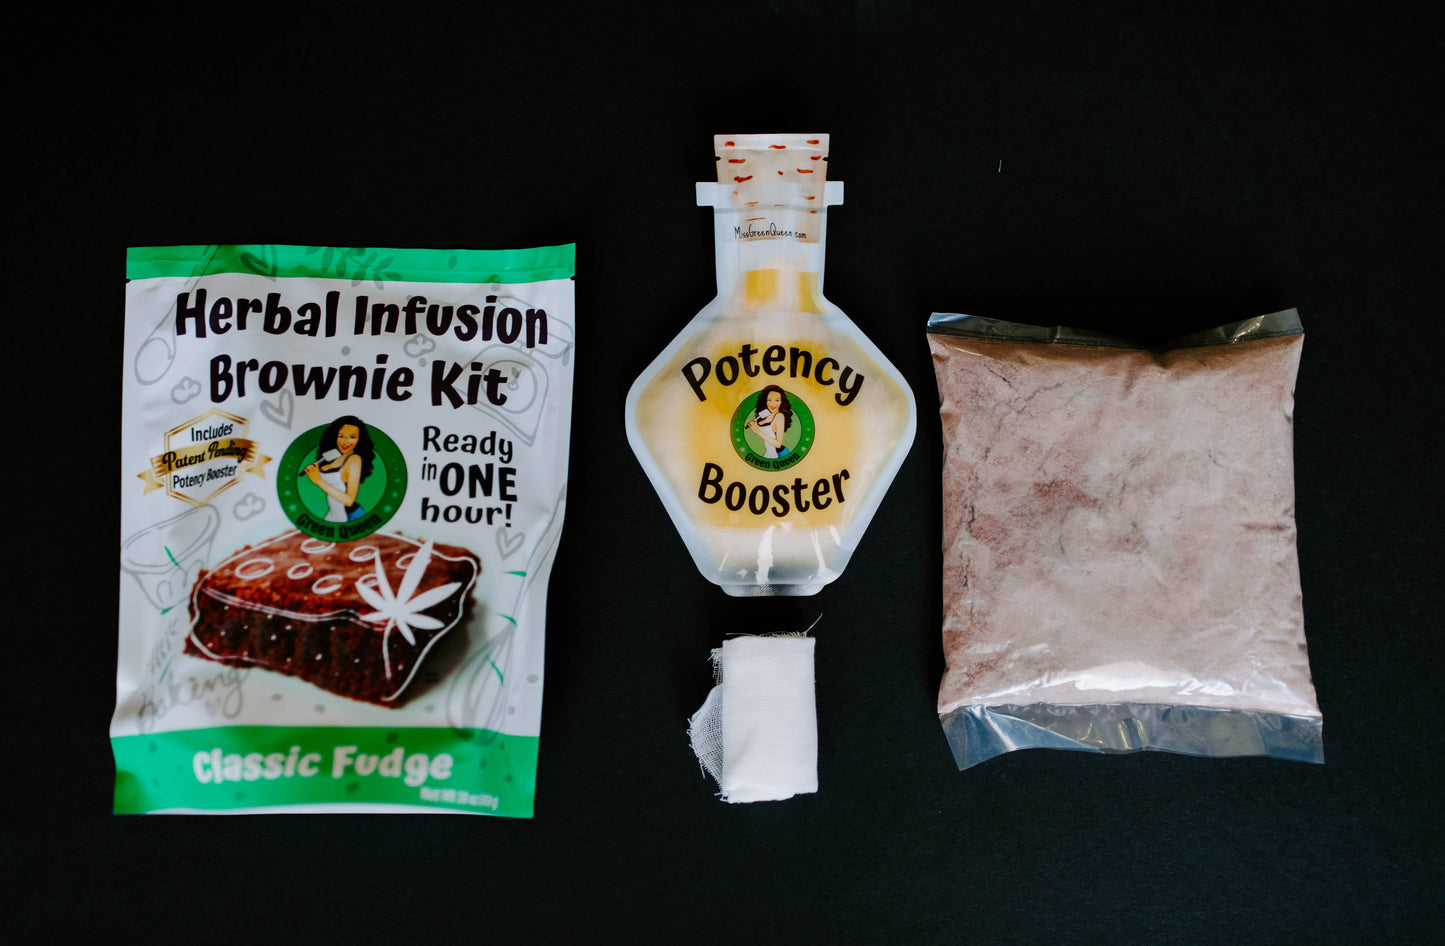 Effortless Weed Brownie Magic: Ultimate DIY Herbal Infusion Kit with Potency Booster